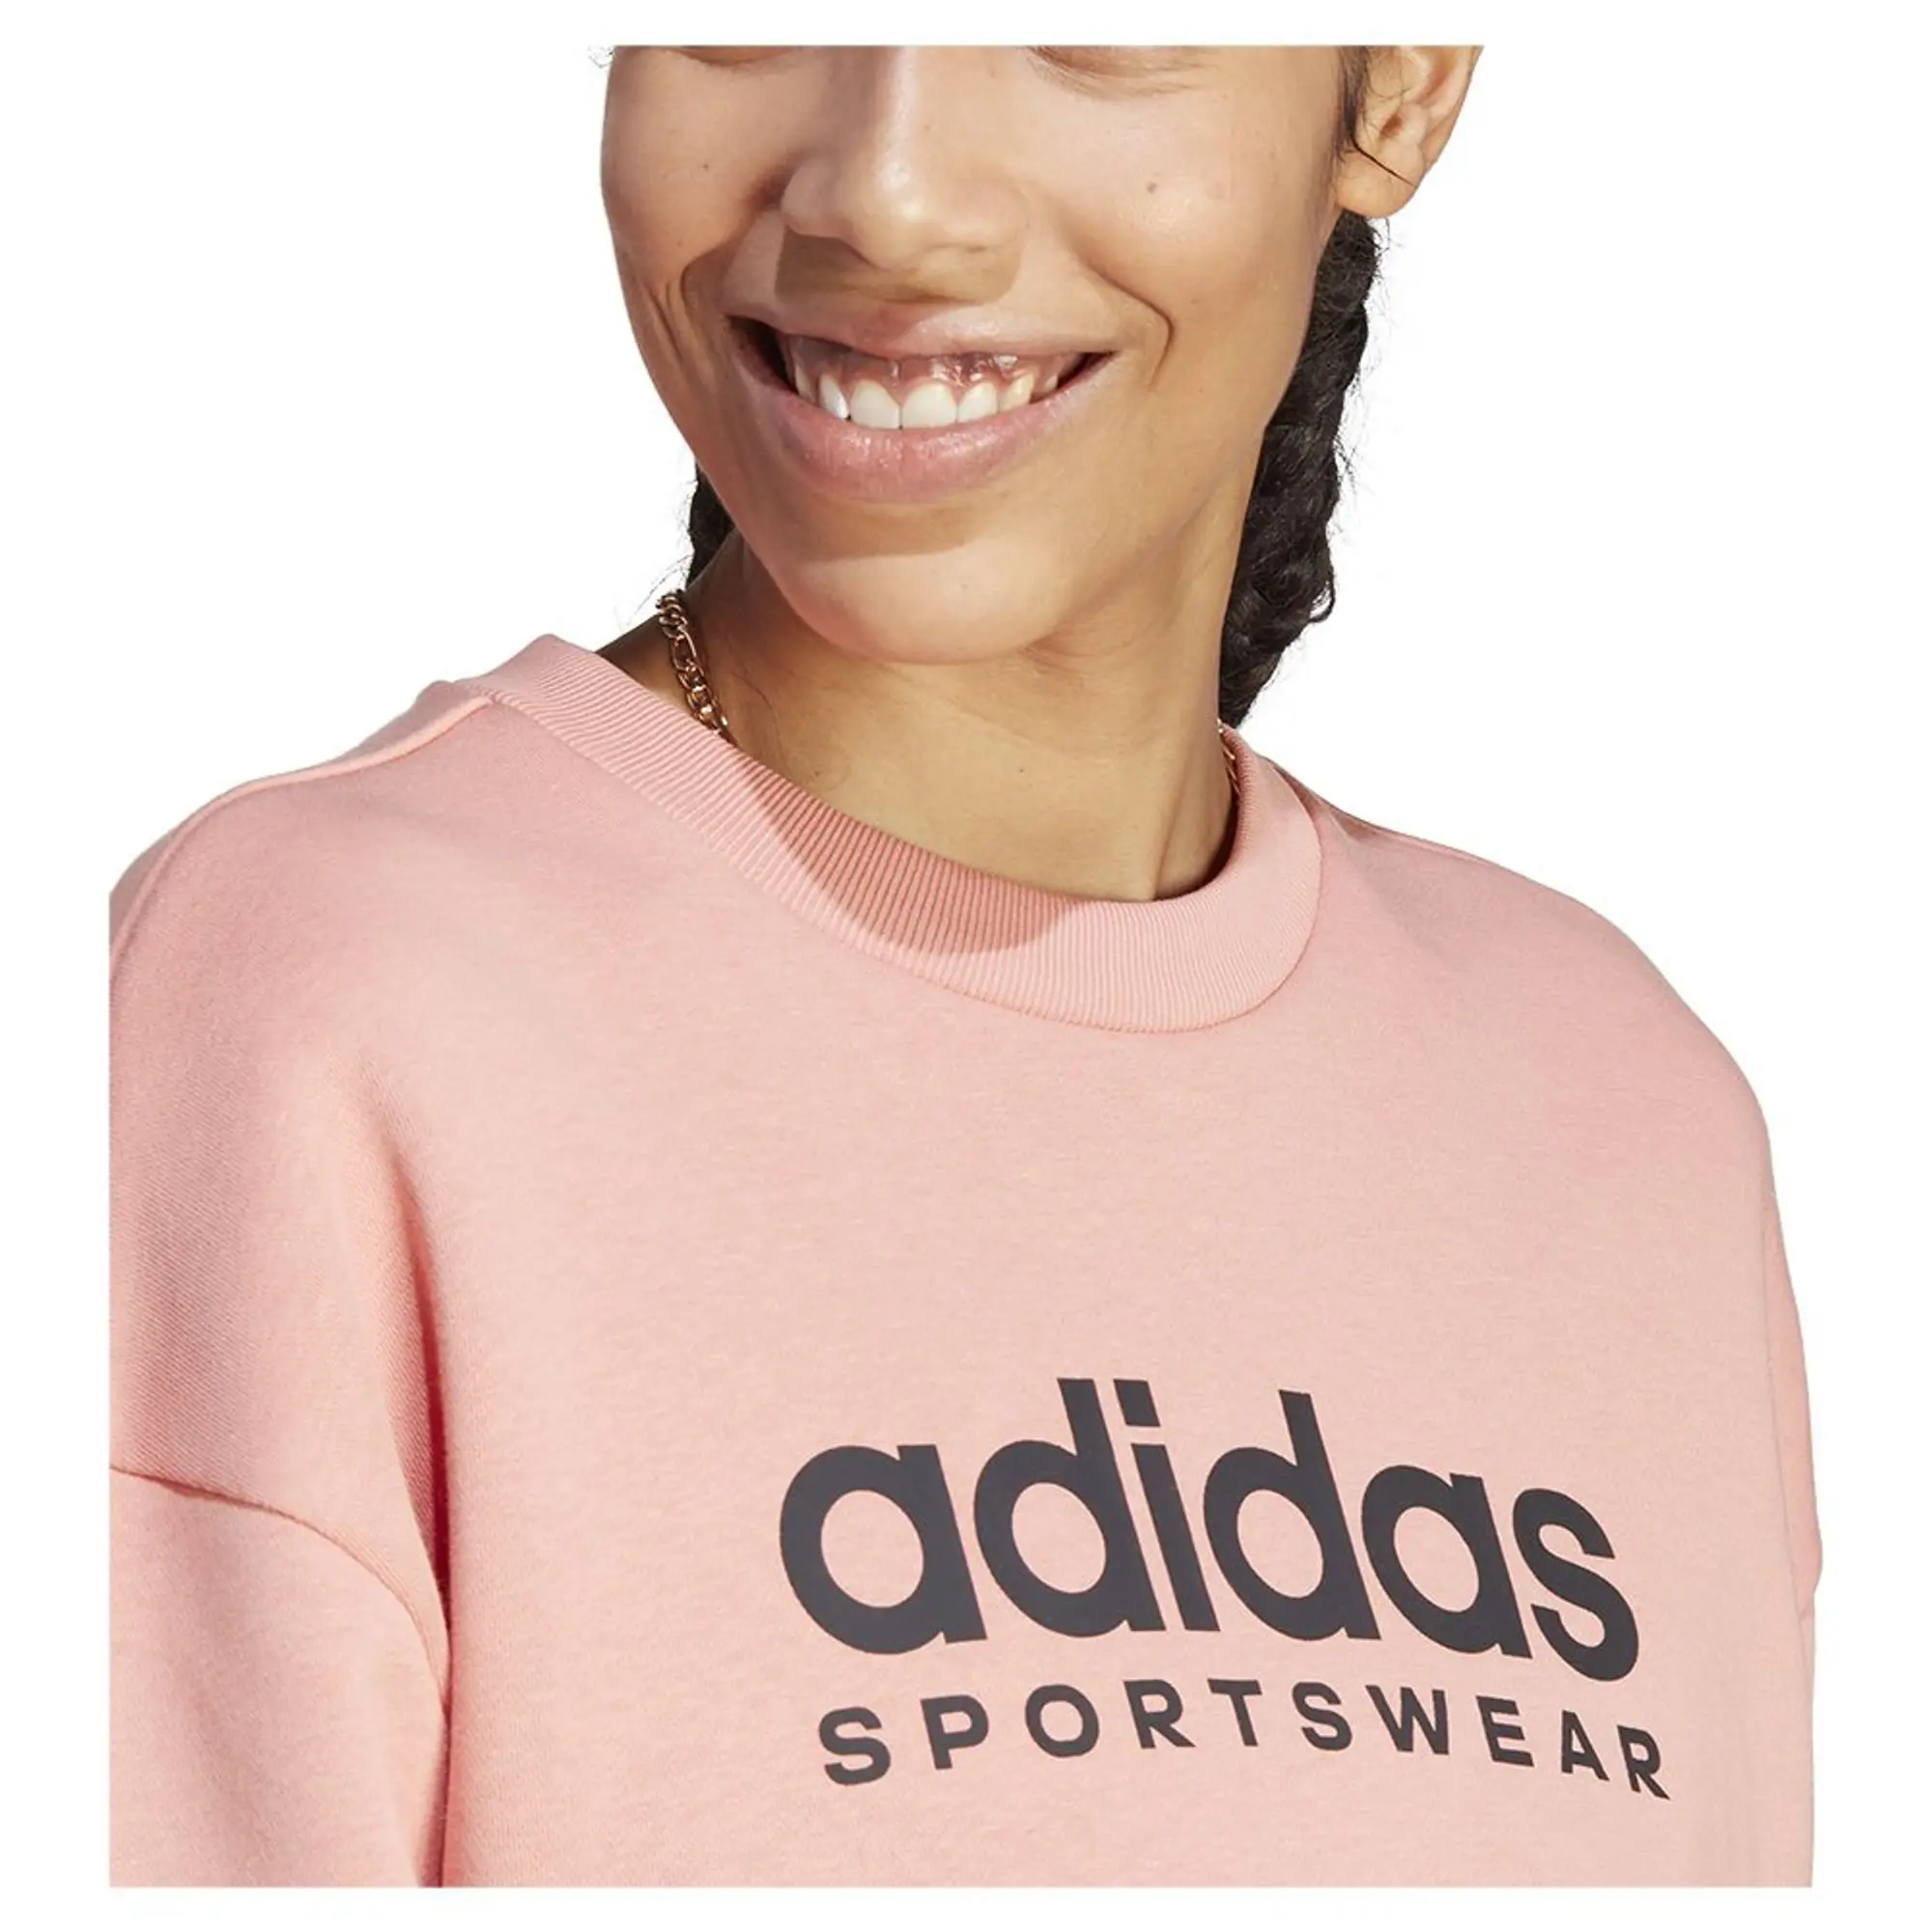 Adidas Sportswear All Szn Fleece Graphic Sweatshirt  - Orange